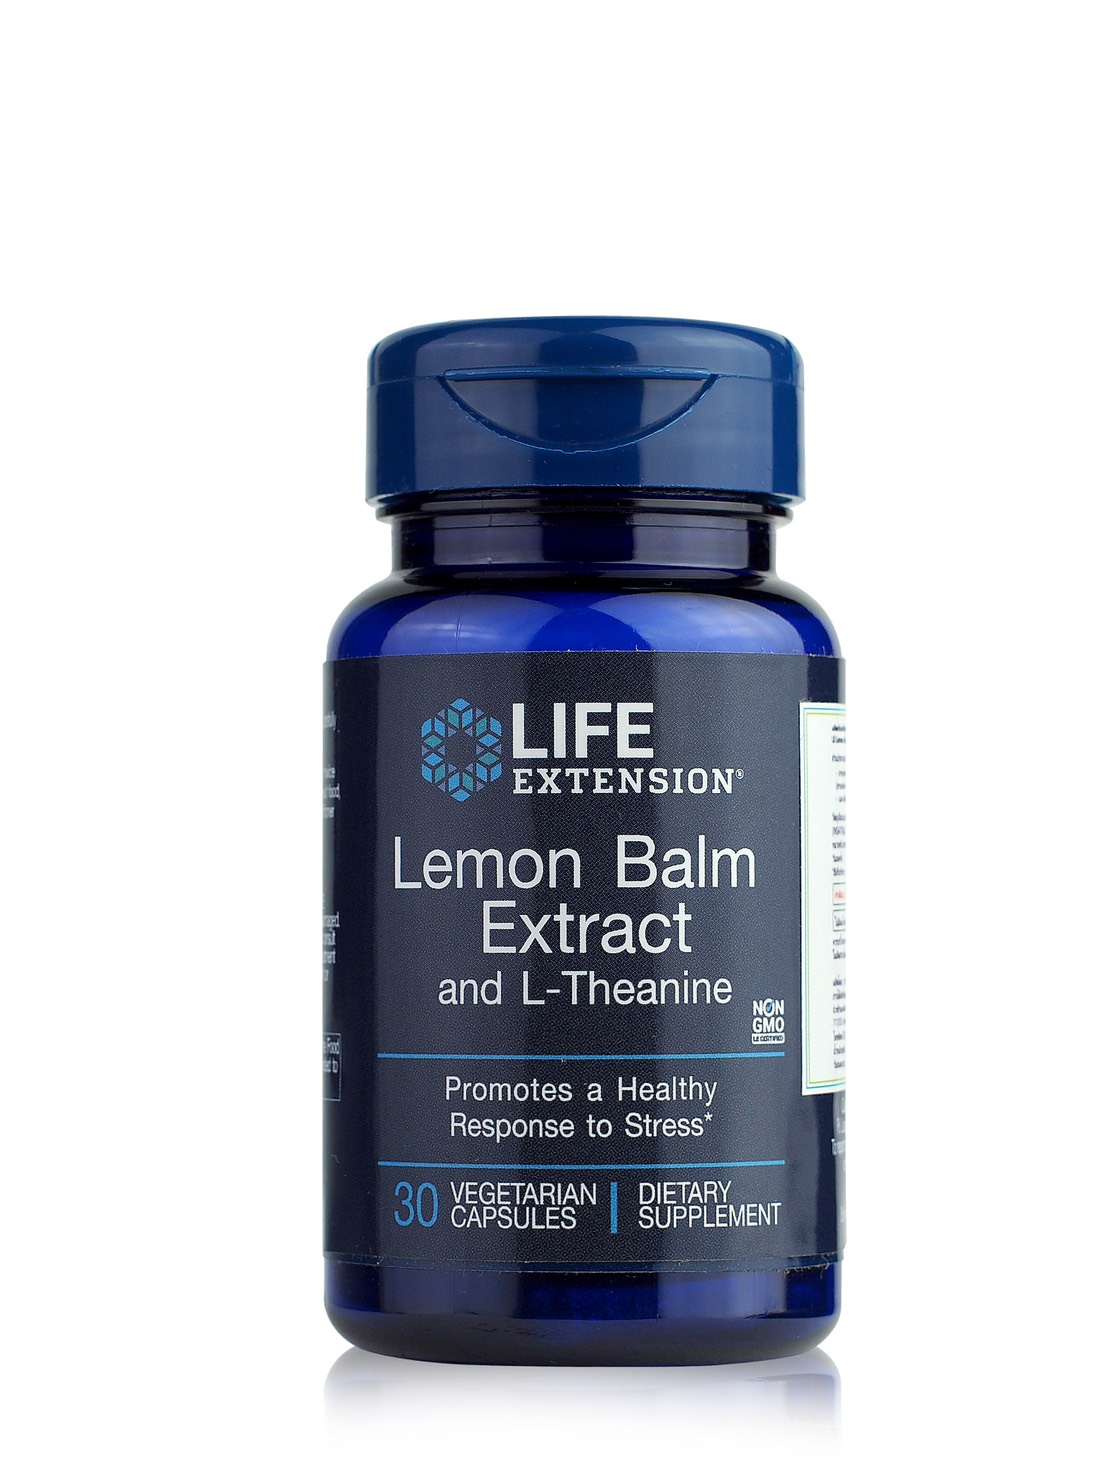 [EXP 01/2022] Life Extension Lemon Balm Extract and L-Theanine (30เม็ด) อารหารเสริม วิตามิน ช่วยนอนหลับ นอนหลับยาก สารสกัดชาเขียว